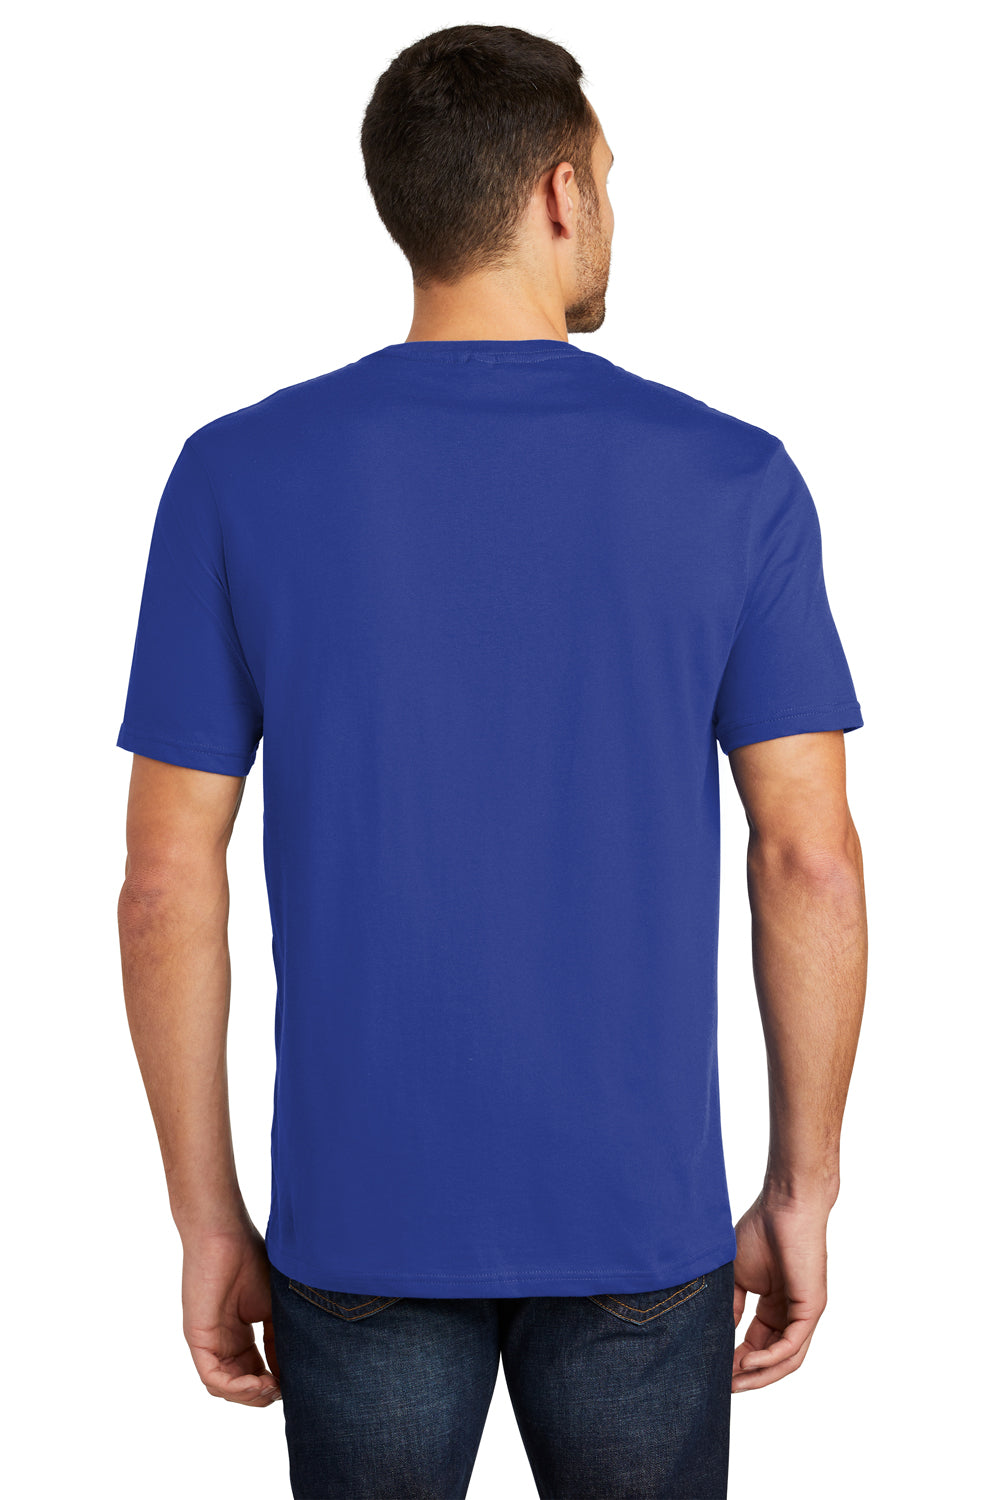 District DT104 Mens Perfect Weight Short Sleeve Crewneck T-Shirt Royal Blue Back